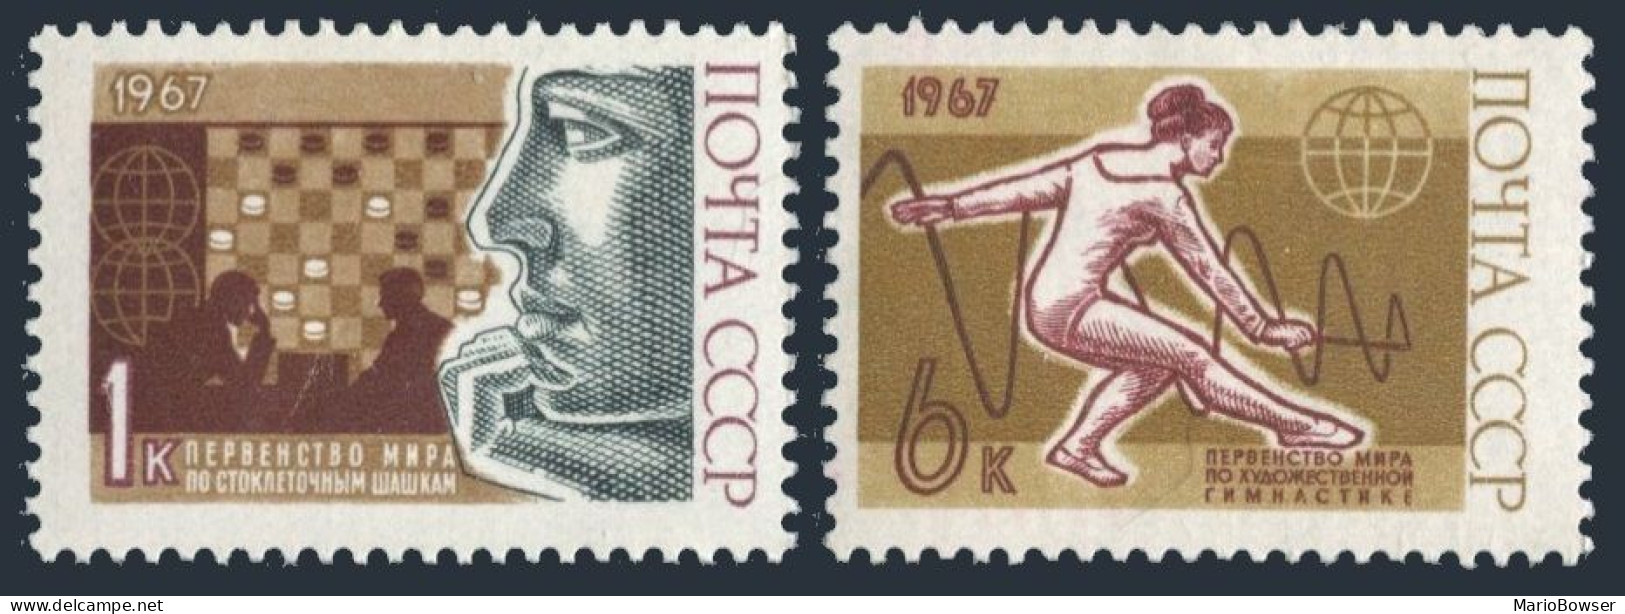 Russia 3361-3362,MNH.Michel 3381,3385. Shashki,Rhythmic Gymnastics,1967. - Unused Stamps